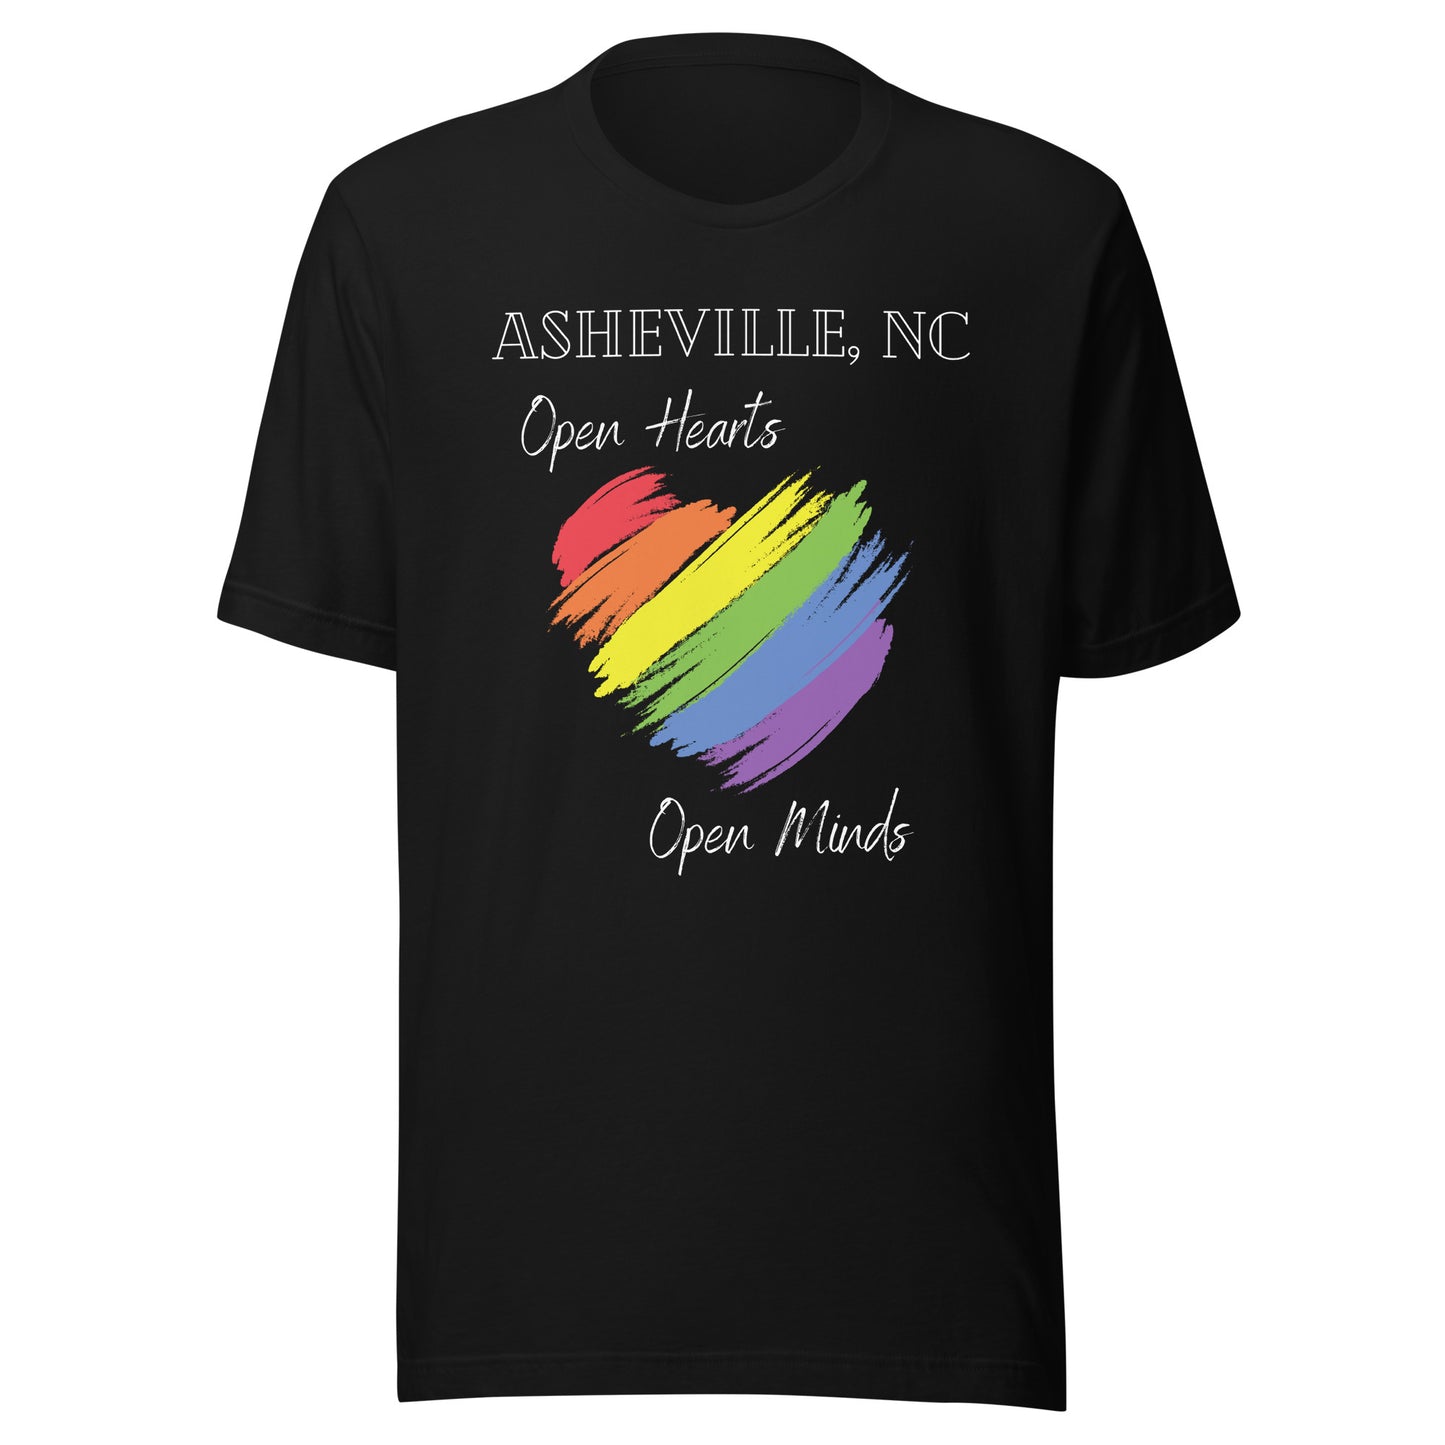 Asheville, NC - Open Hearts, Open Minds - Black T-shirt